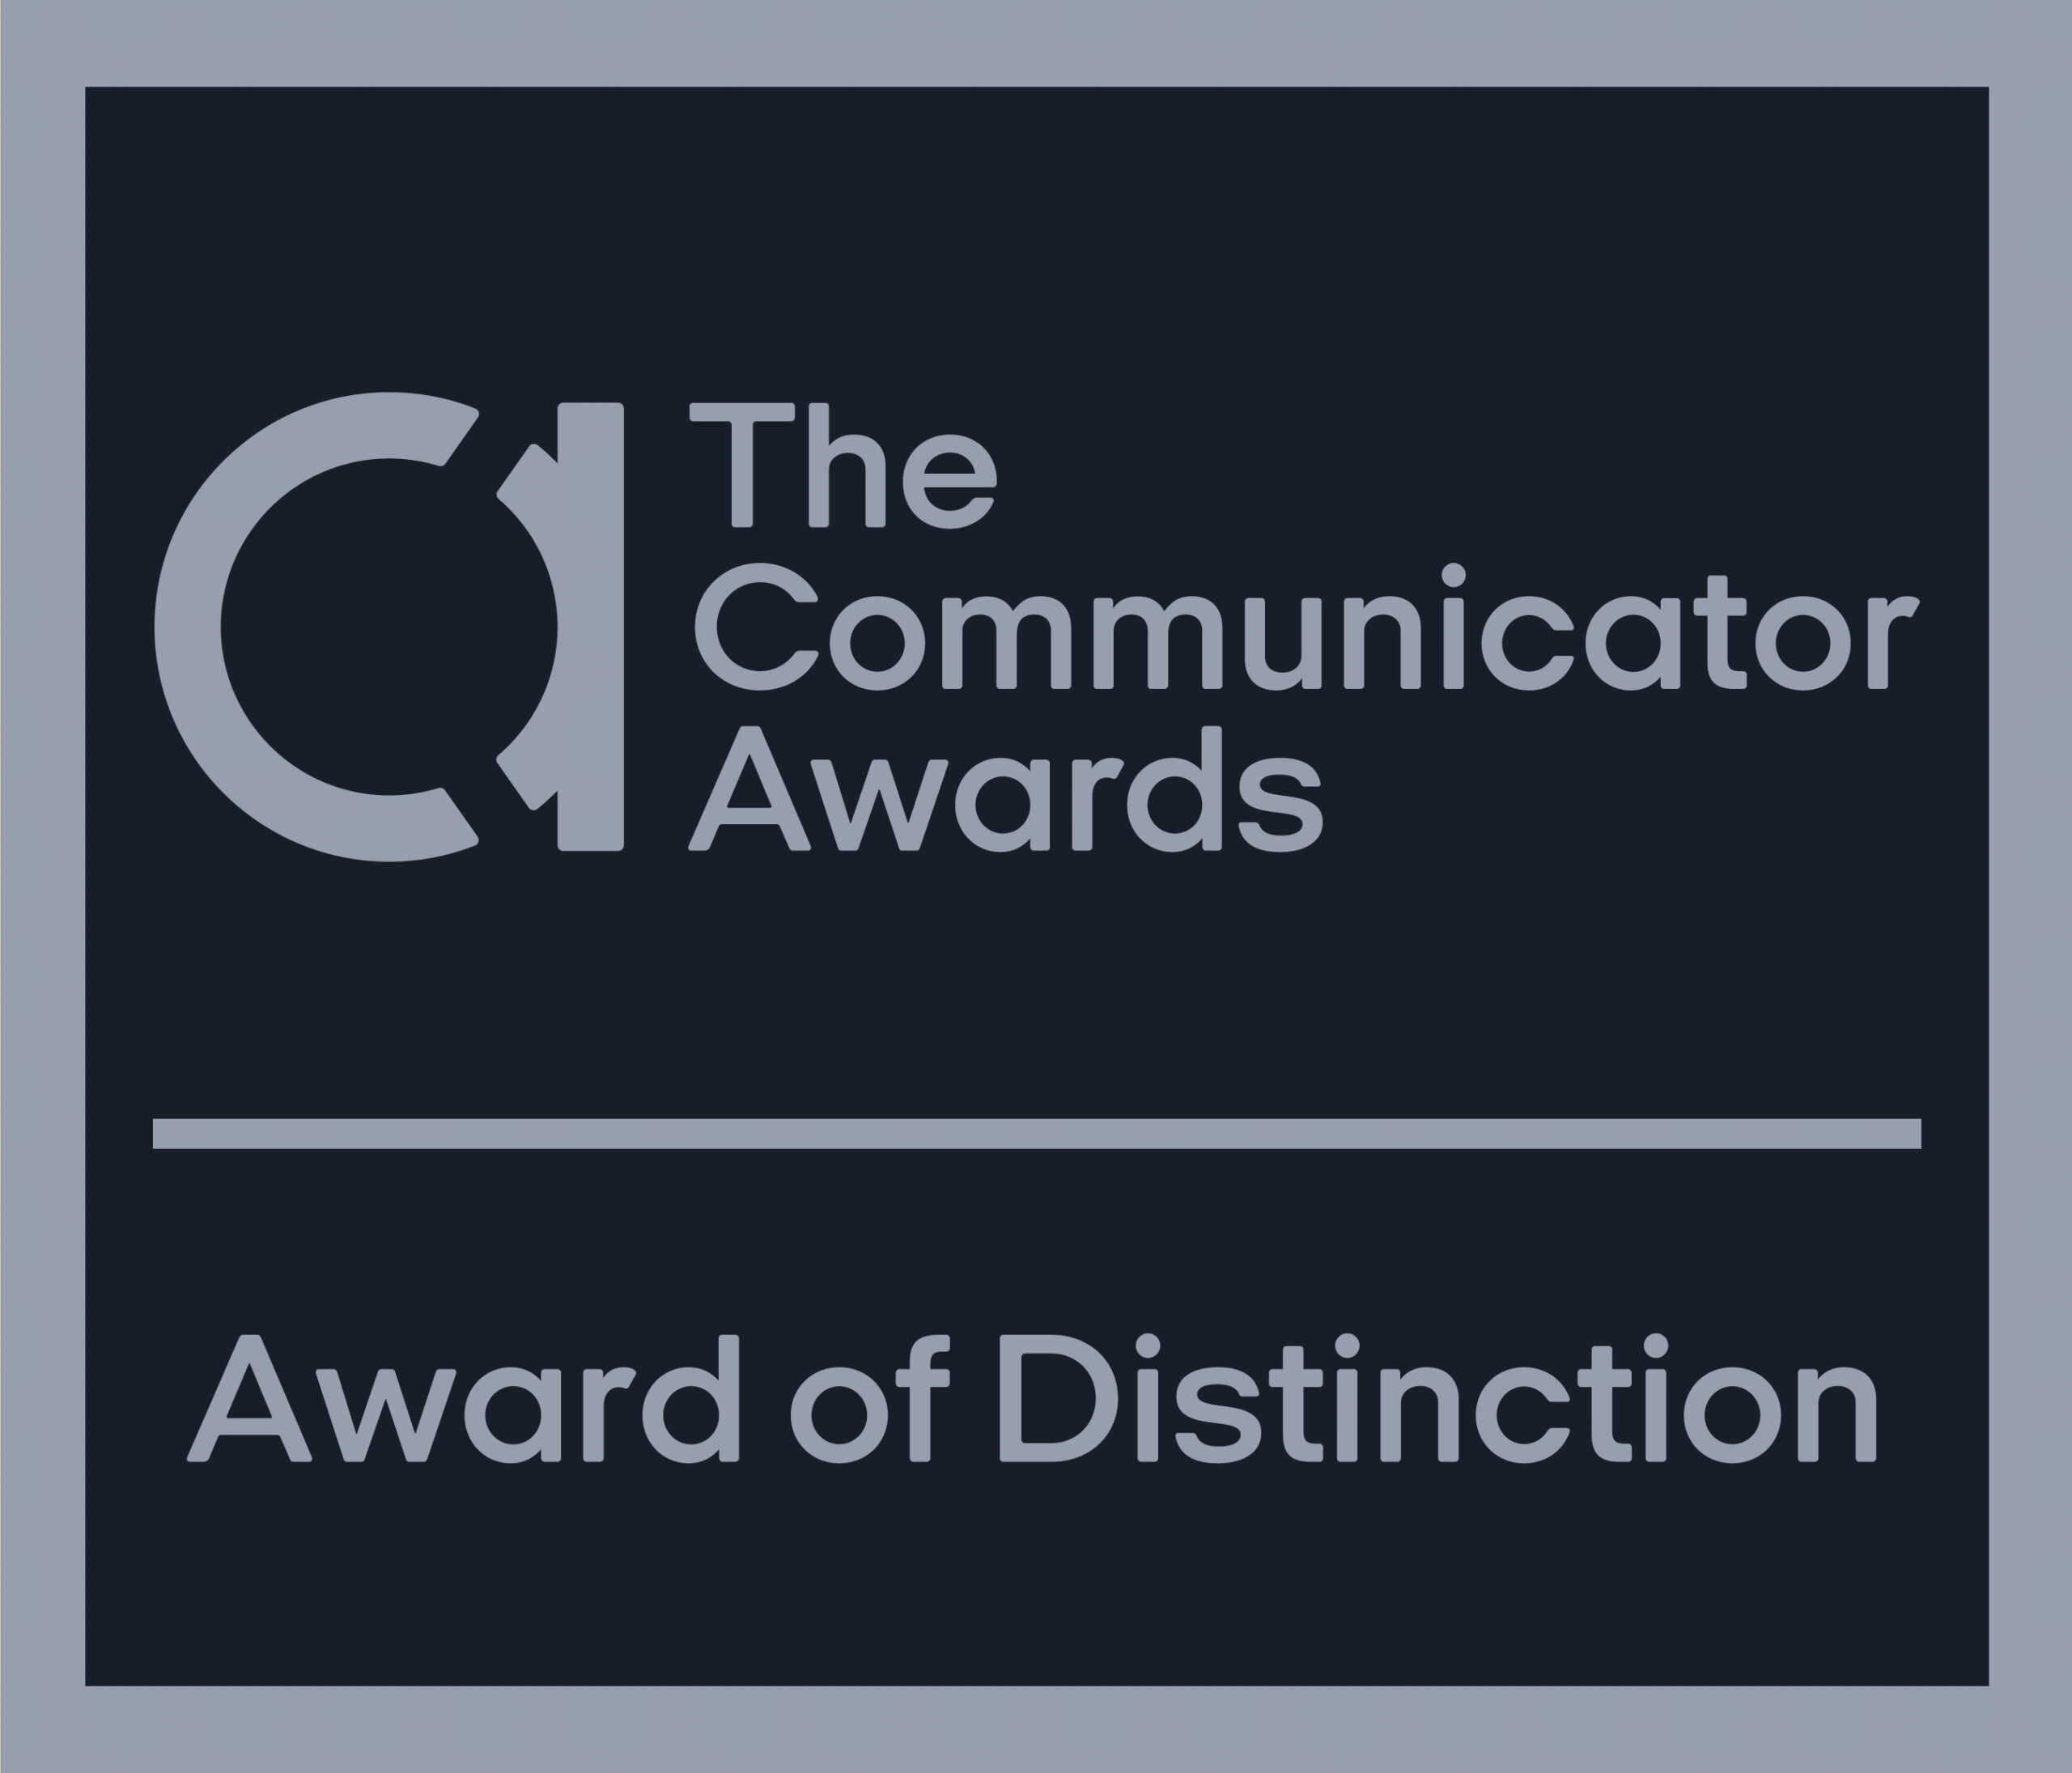 communicator awards 2022 badge award of distinction award winning healthcare video production agency